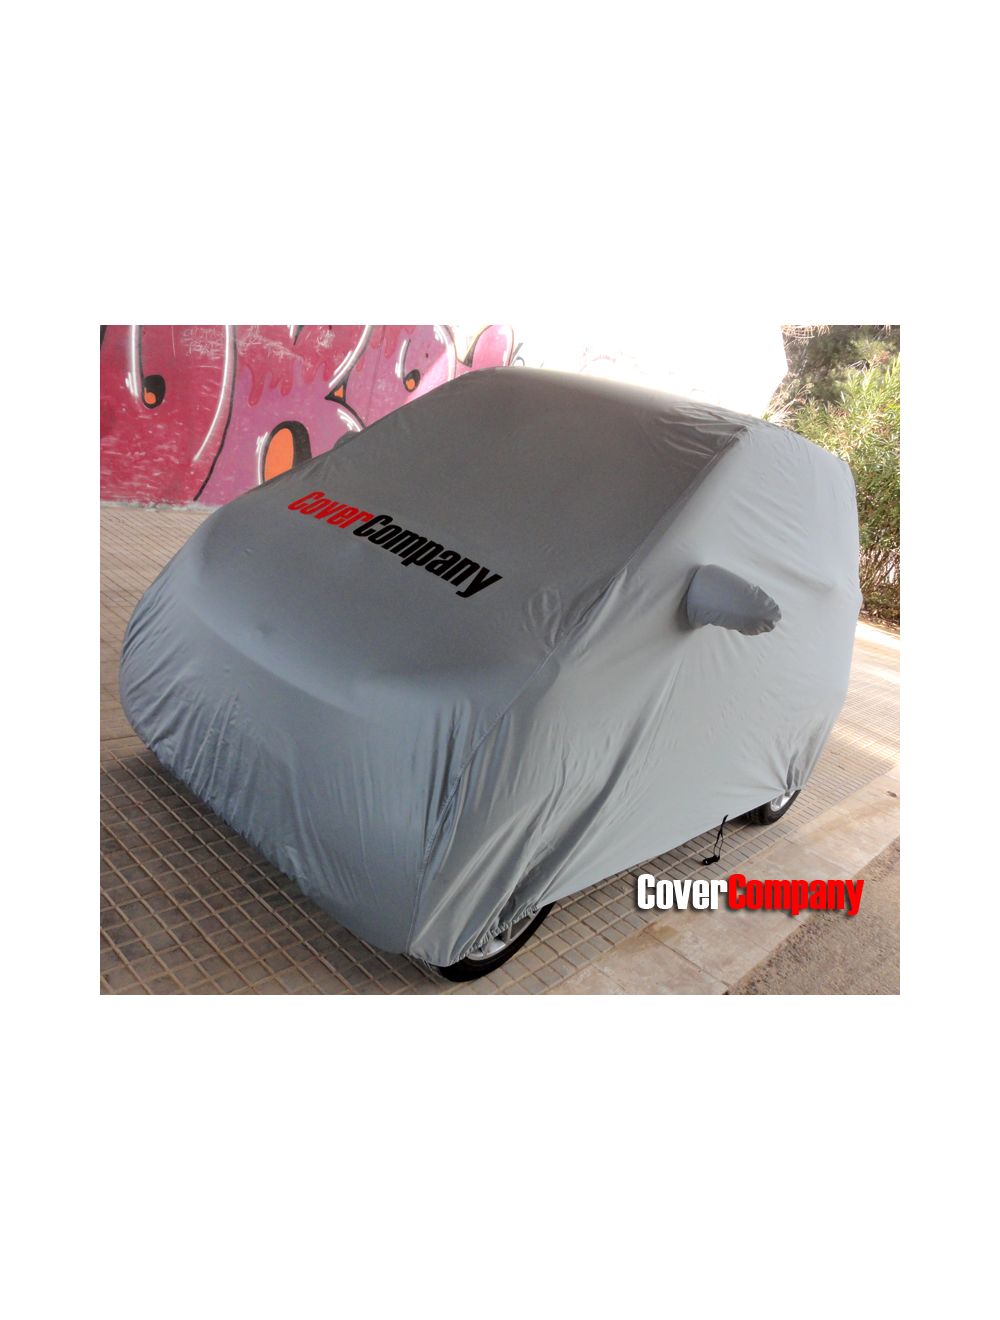 Custom Outdoor Car Cover for Renault. Waterproof Car Cover US